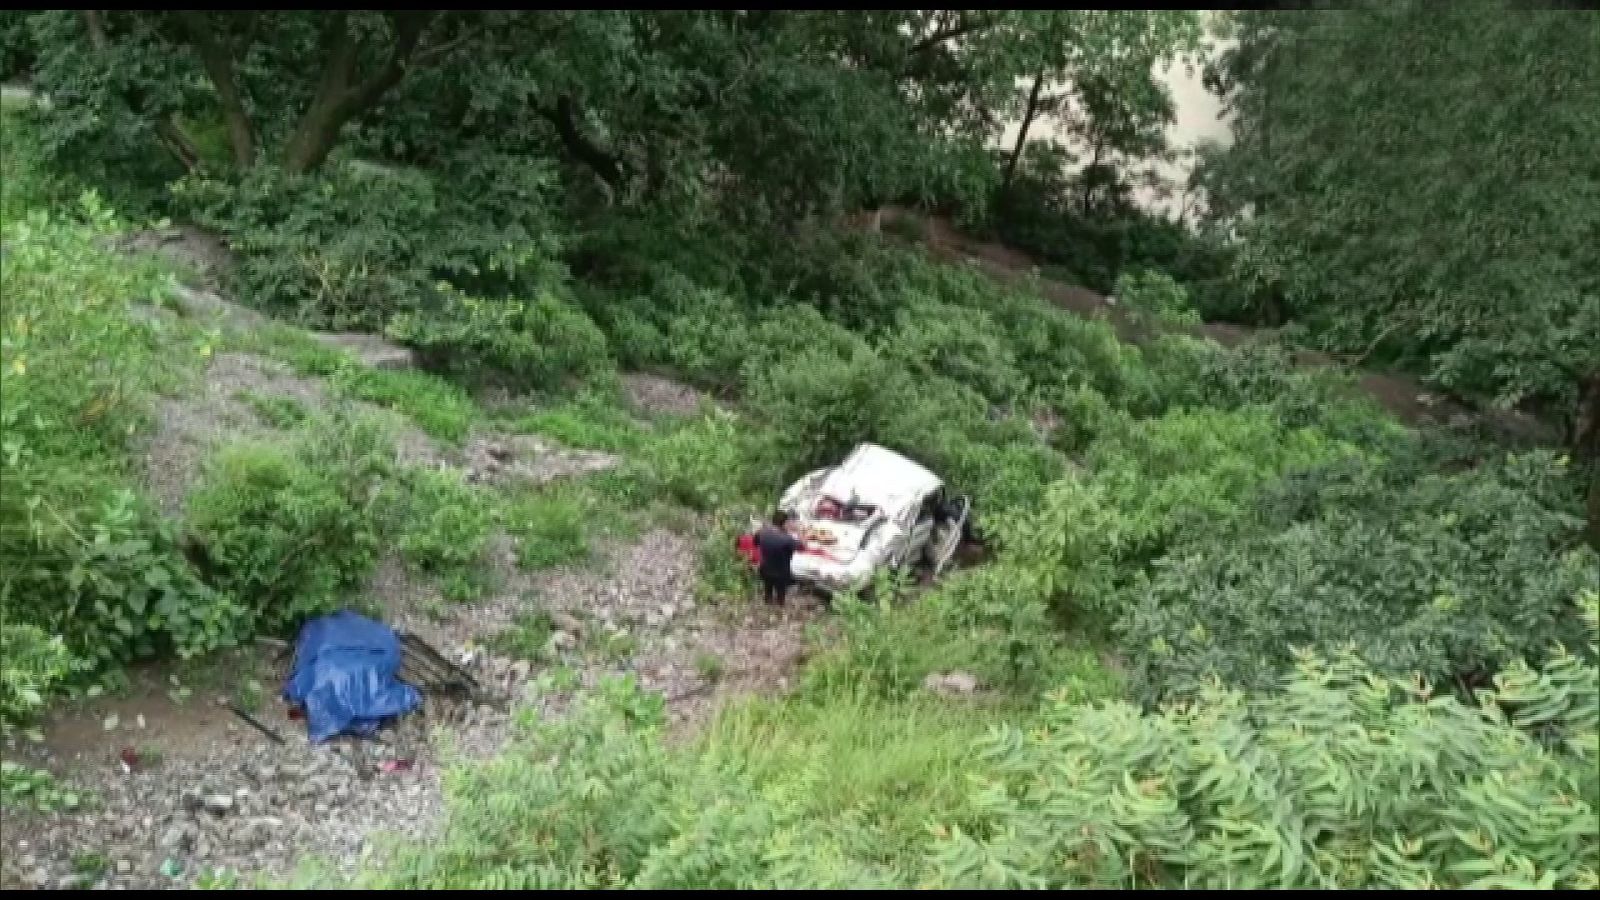 Major Accident On Rishikesh-Badrinath Road In Uttarakhand